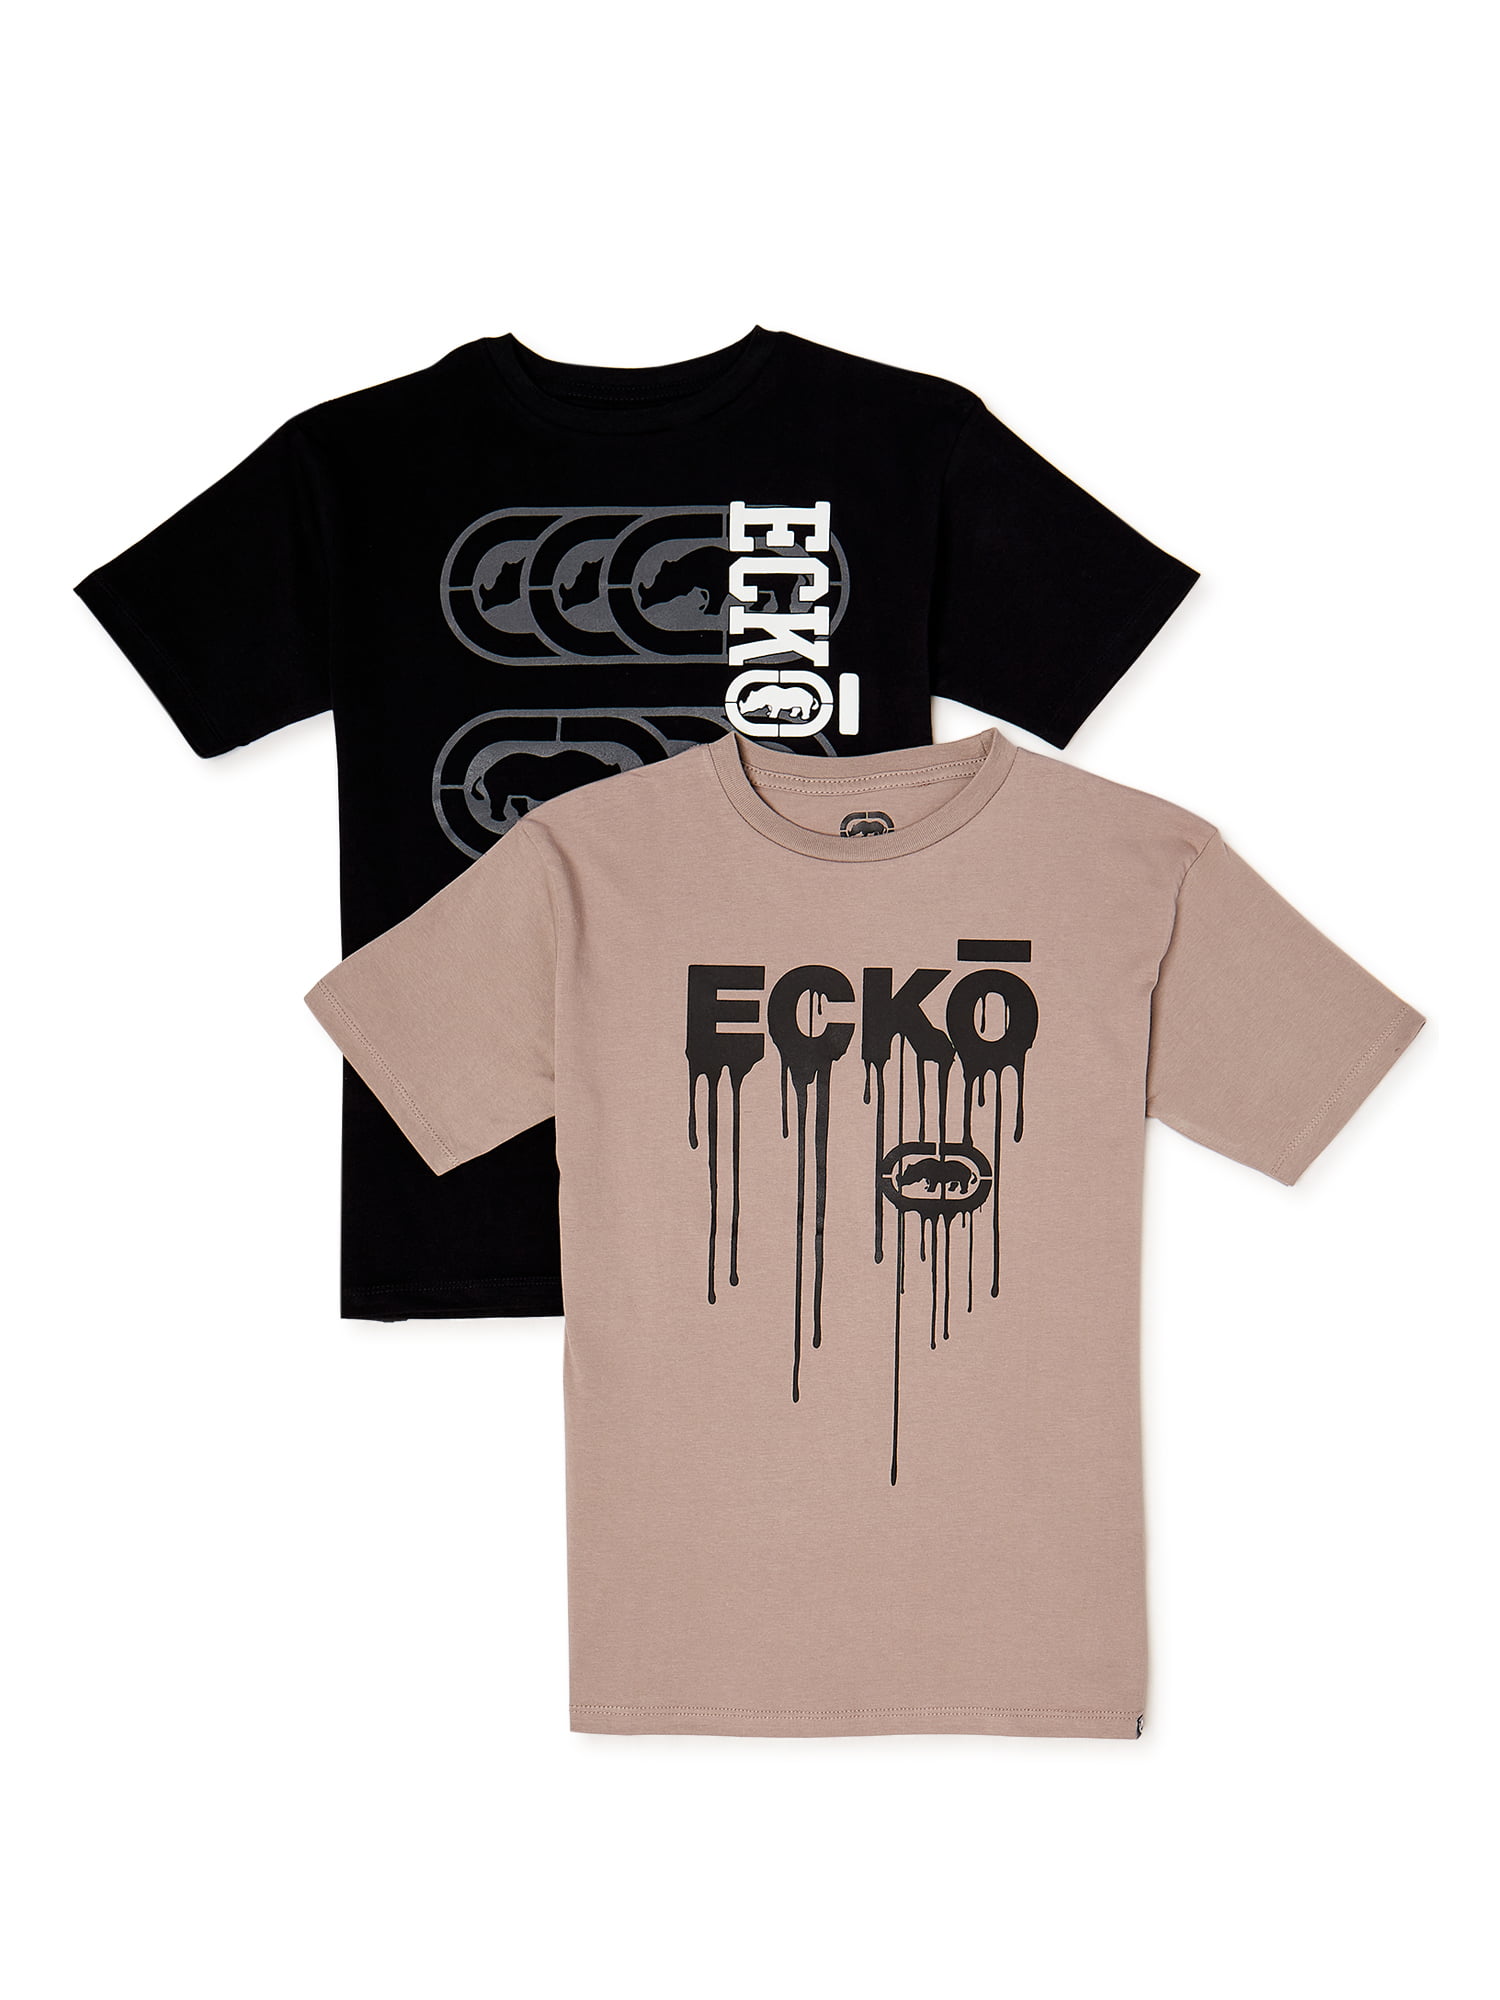 Ecko Boys Graphic Short Sleeve T-Shirts, 2-Pack, Sizes 4-16